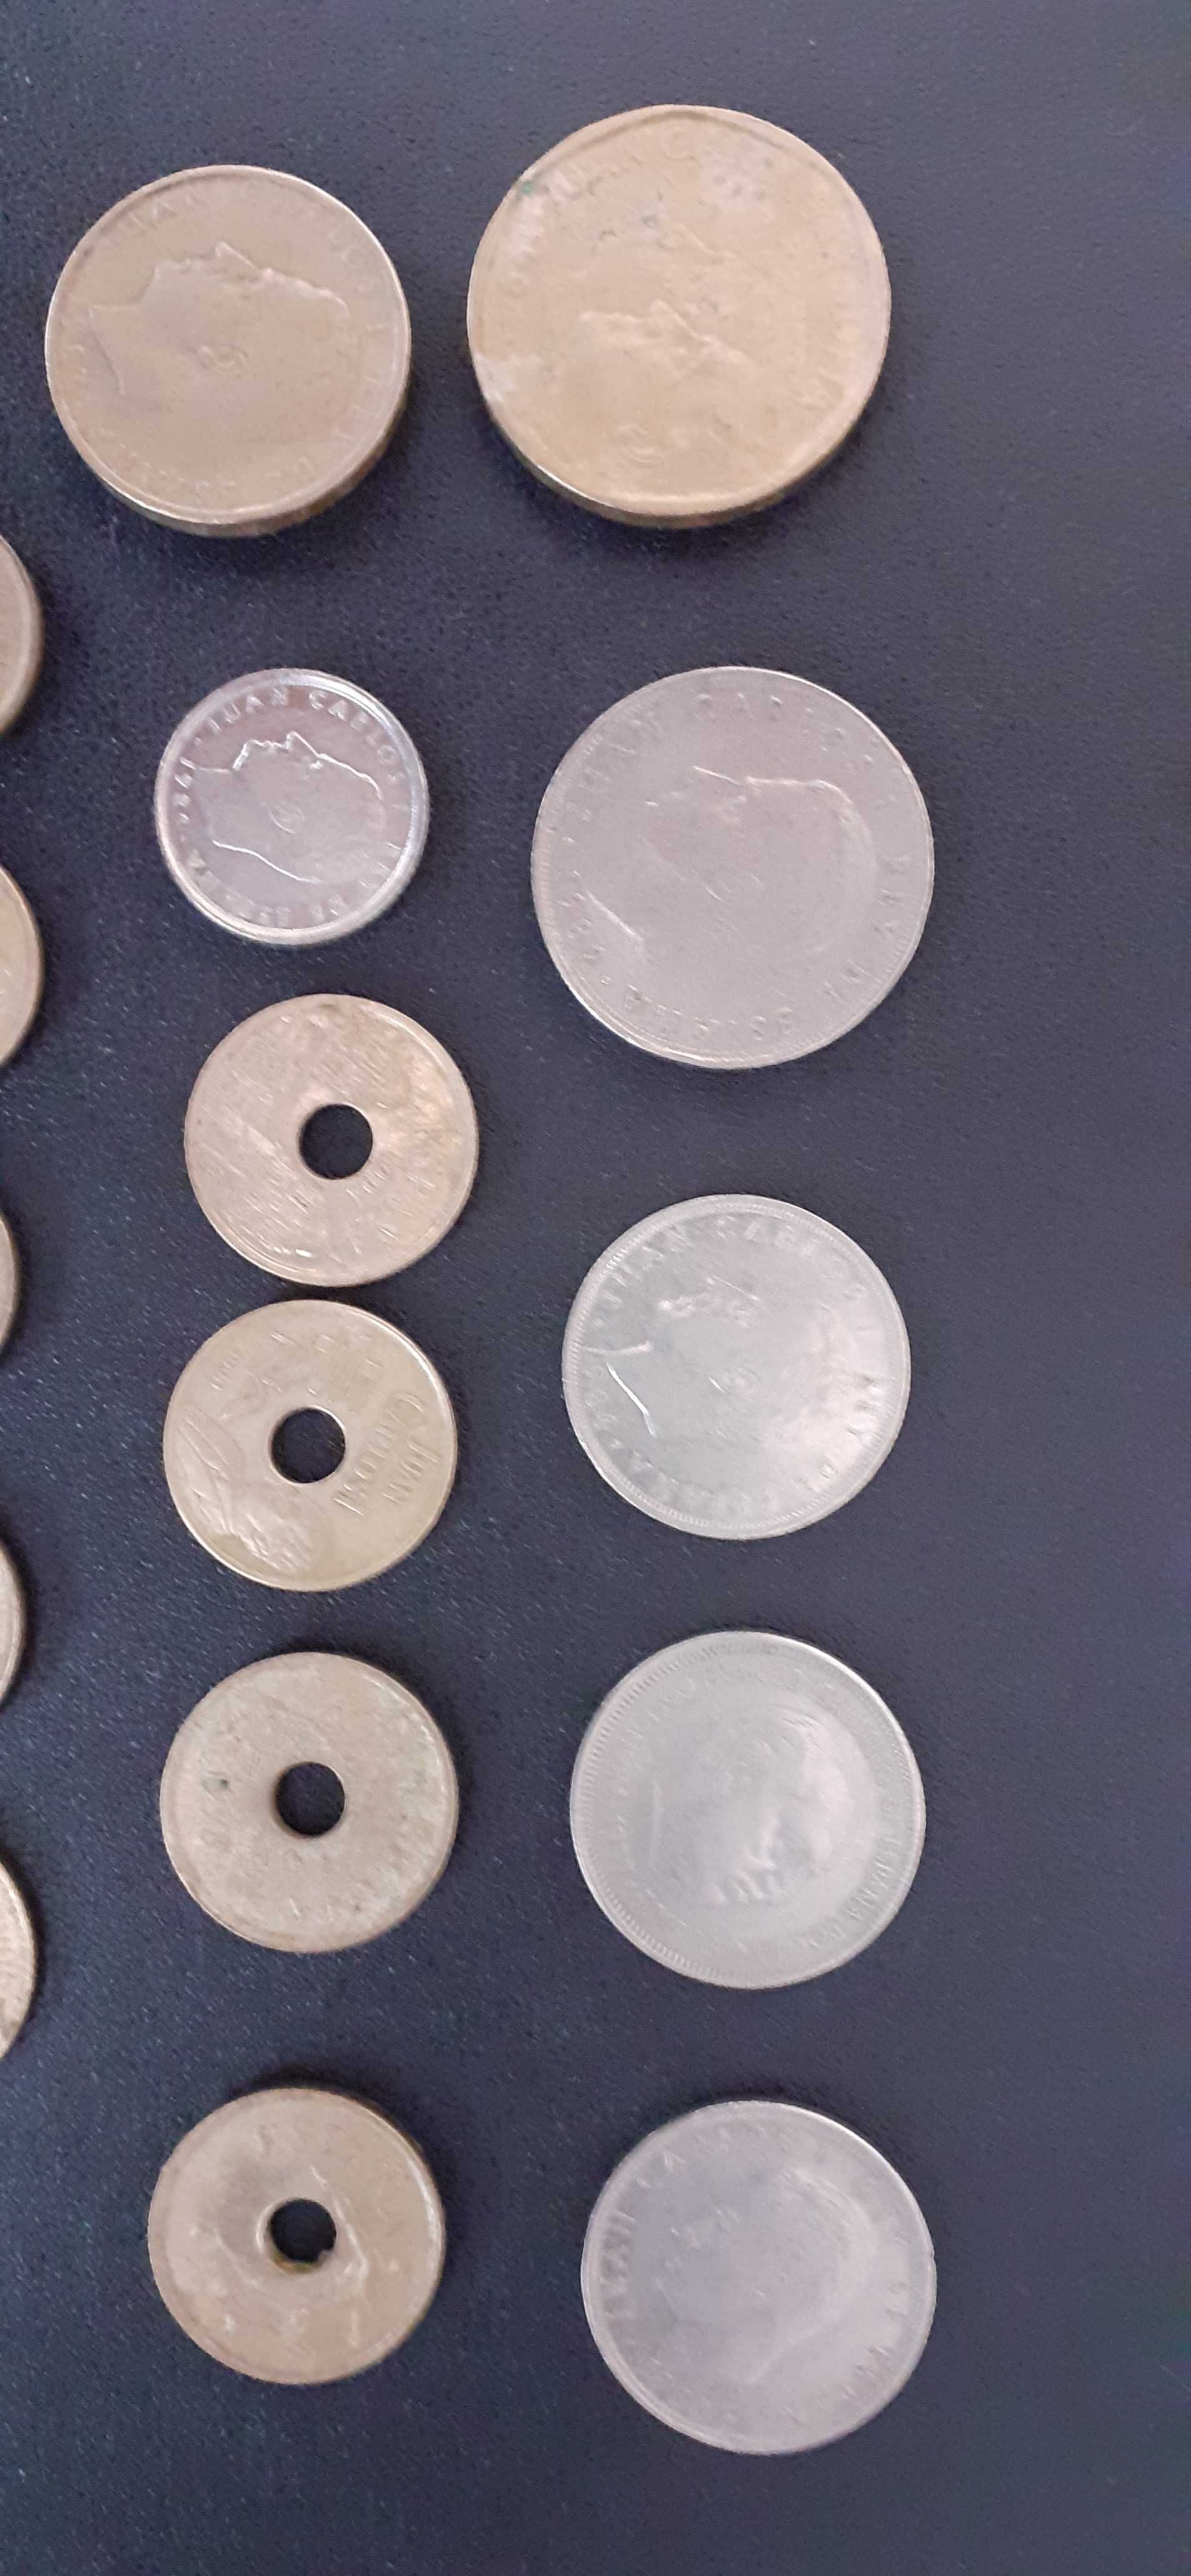 Monety Hiszpanii zestaw 25 sztuk.